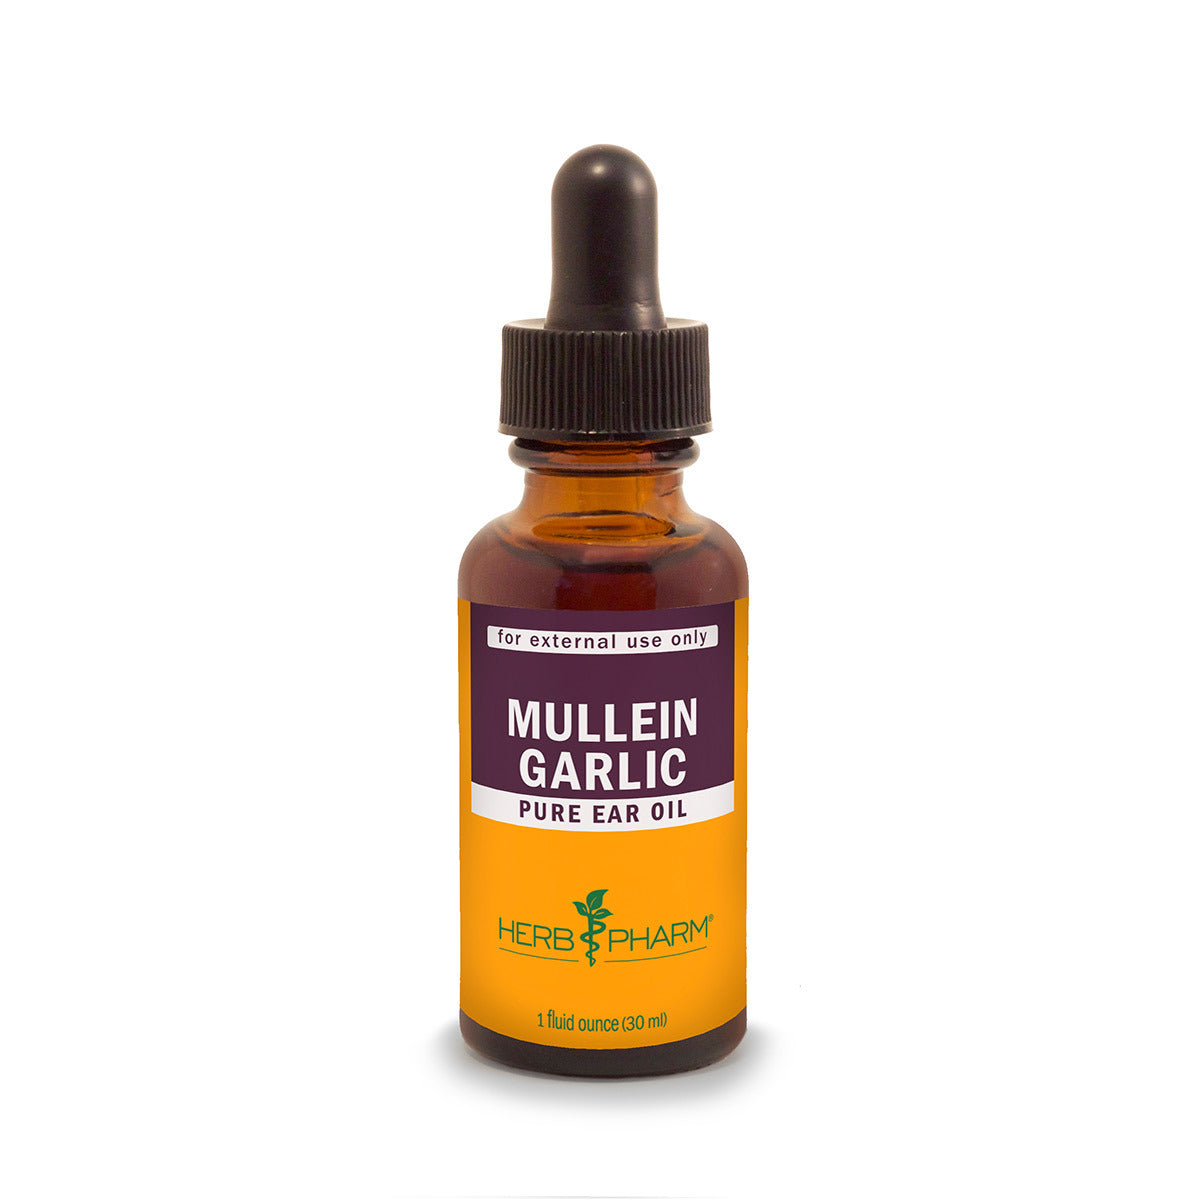 Primary image of Mullein Garlic Compound